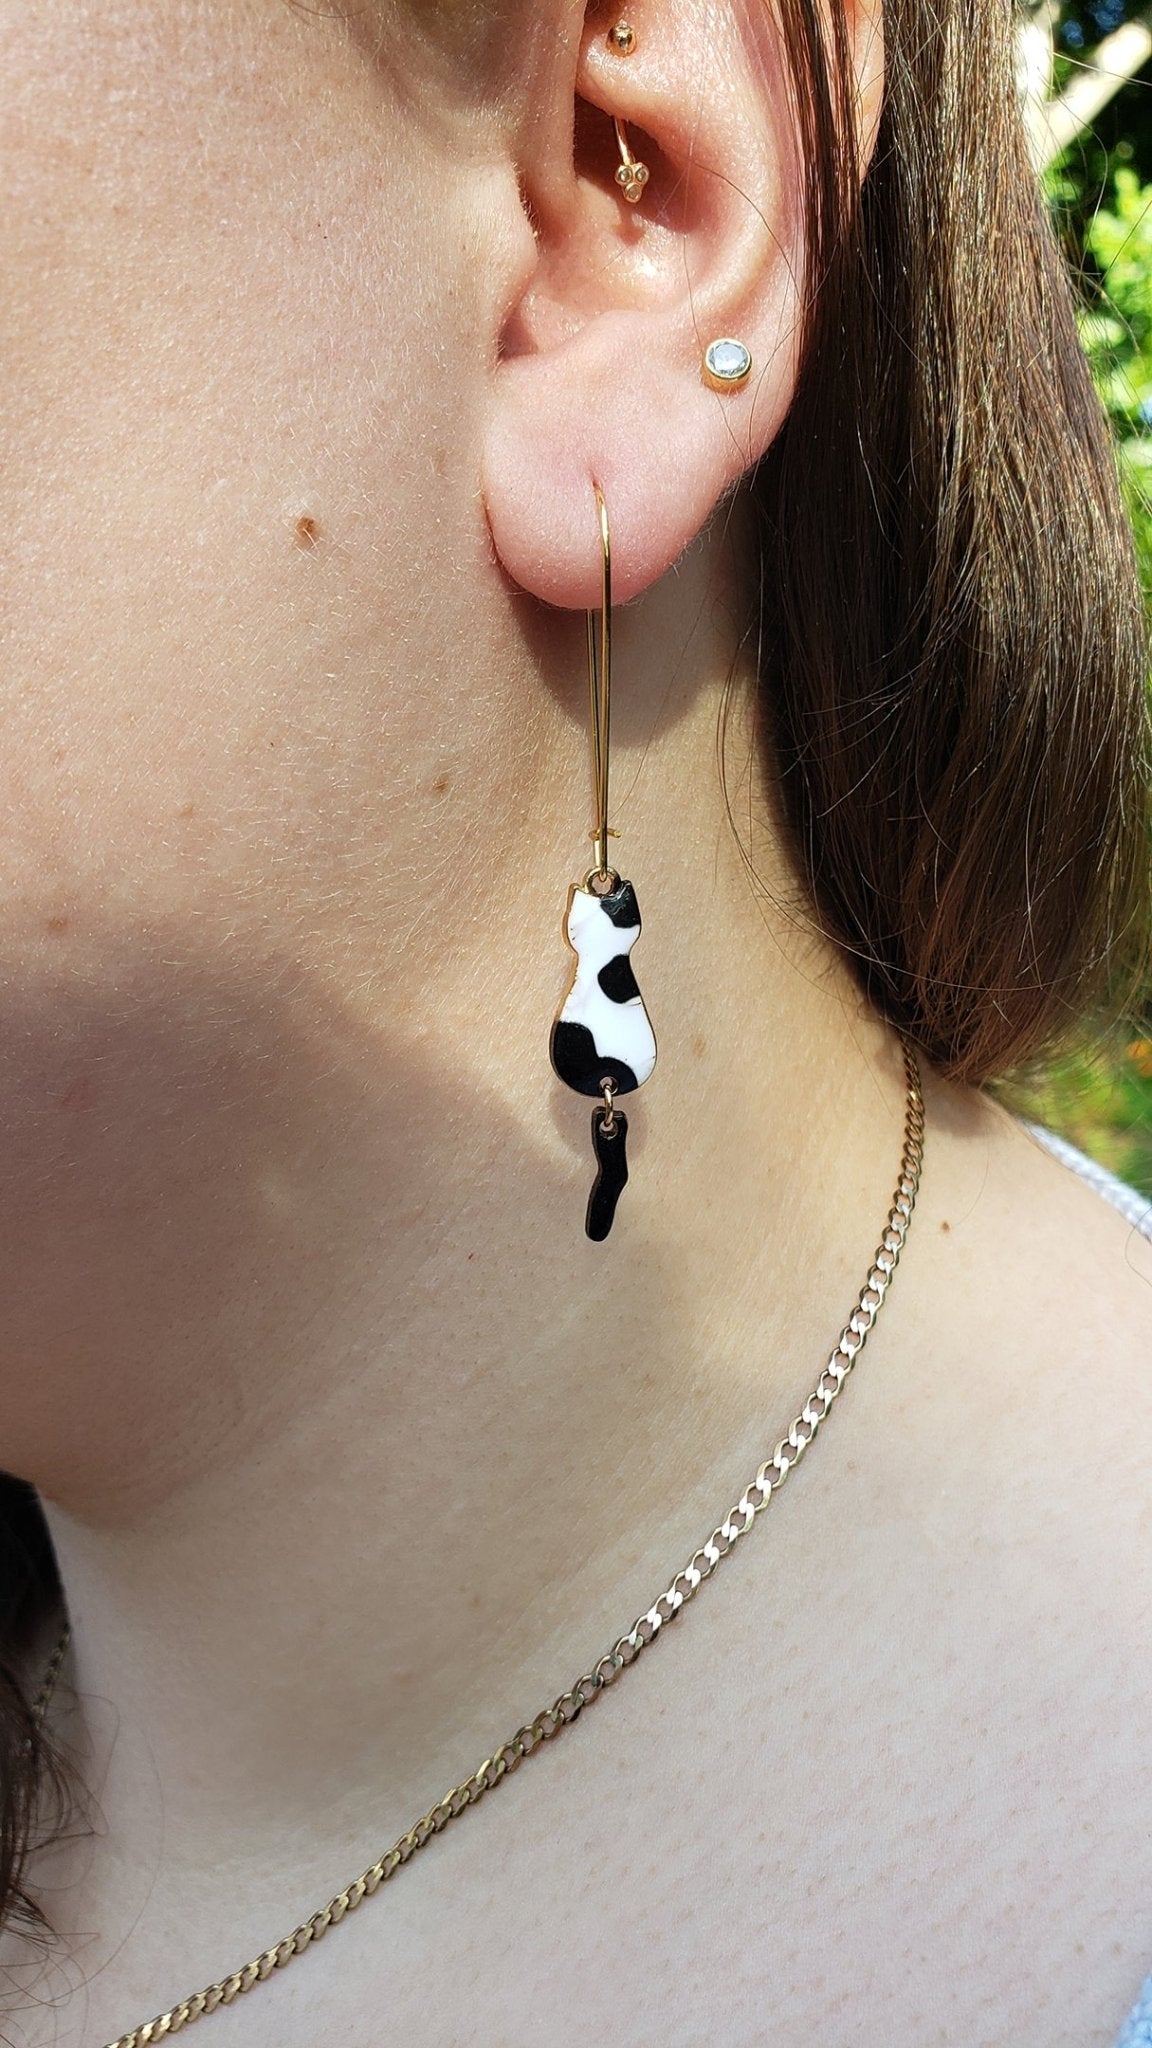 Realistic cat earrings - Lincraft Design